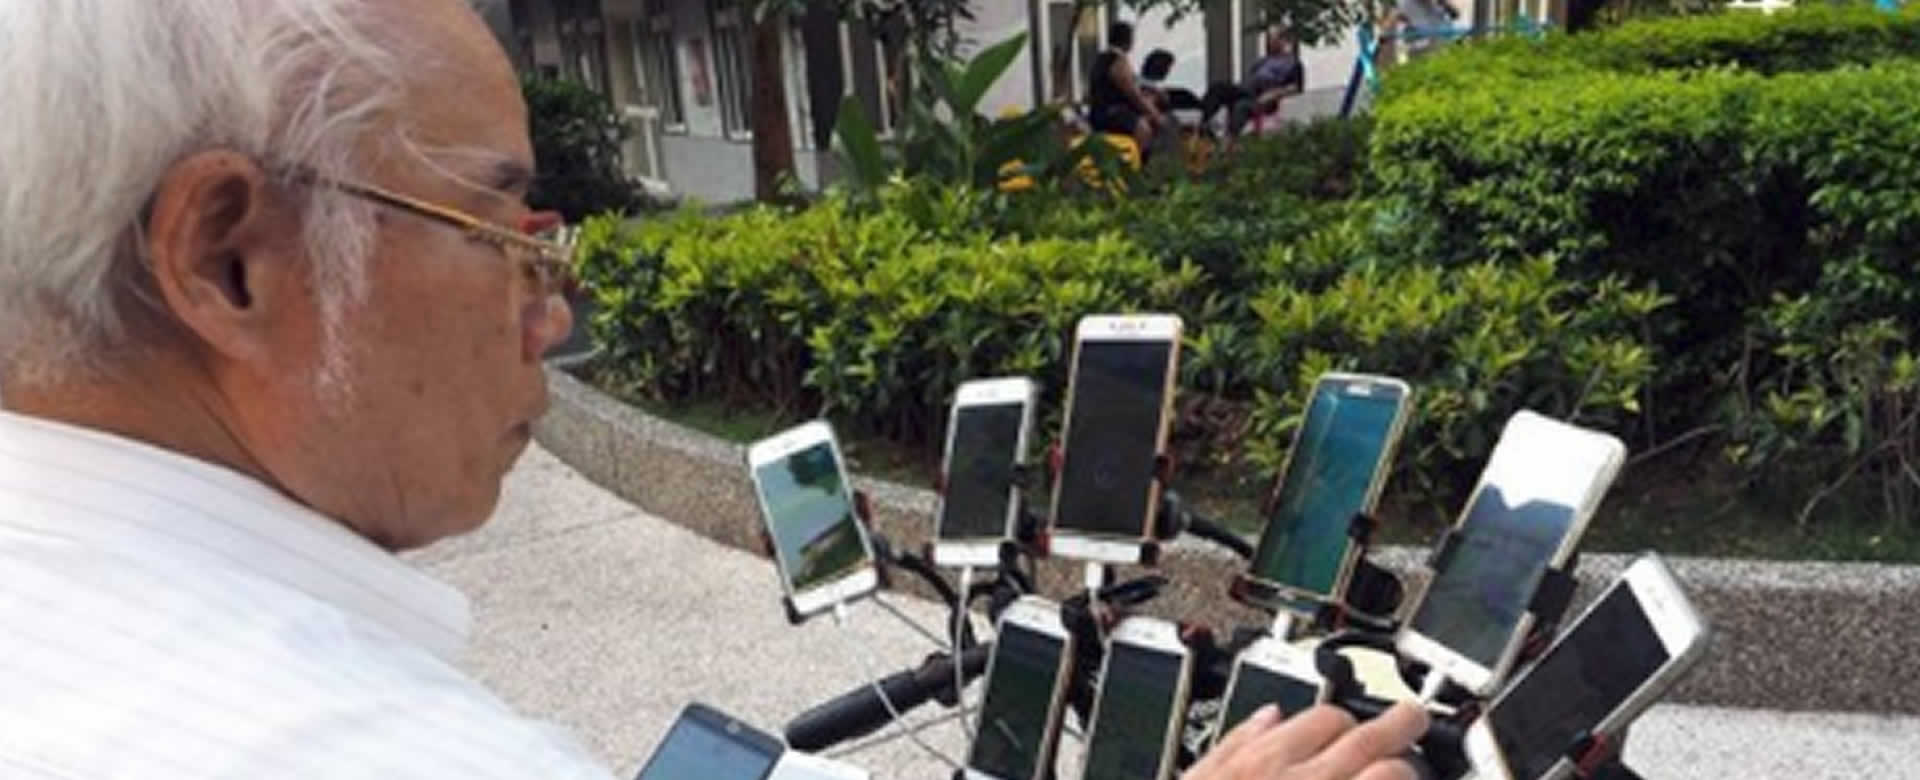 Abuelo de 70 años recorrer las calles en bicicleta junto a 11 celulares